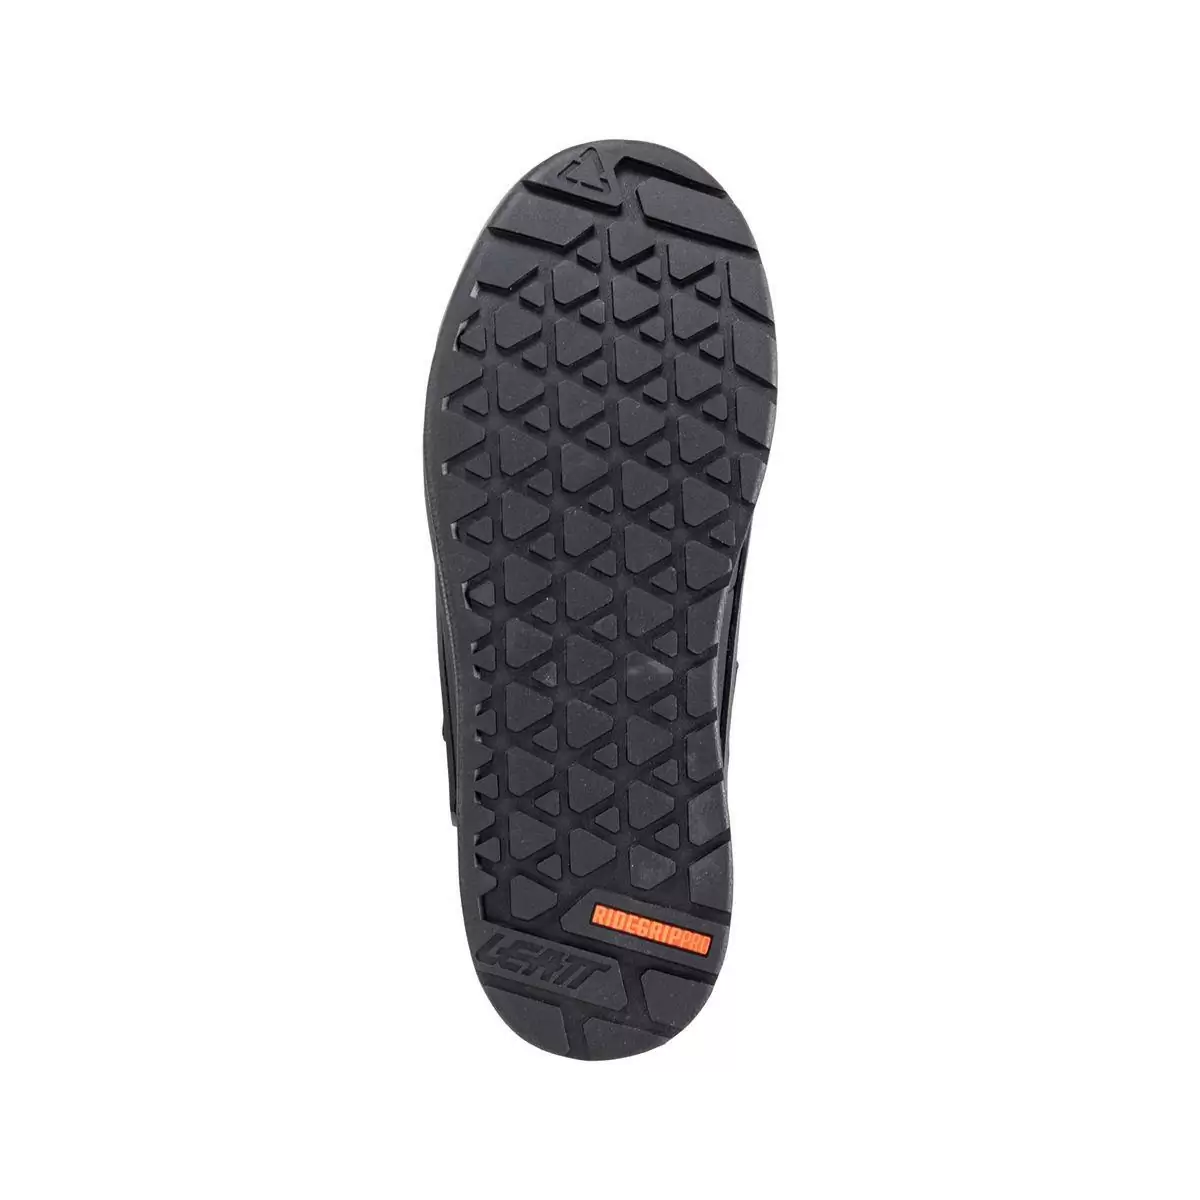 Pro Flat 3.0 MTB Shoes Black Size 38.5 #4